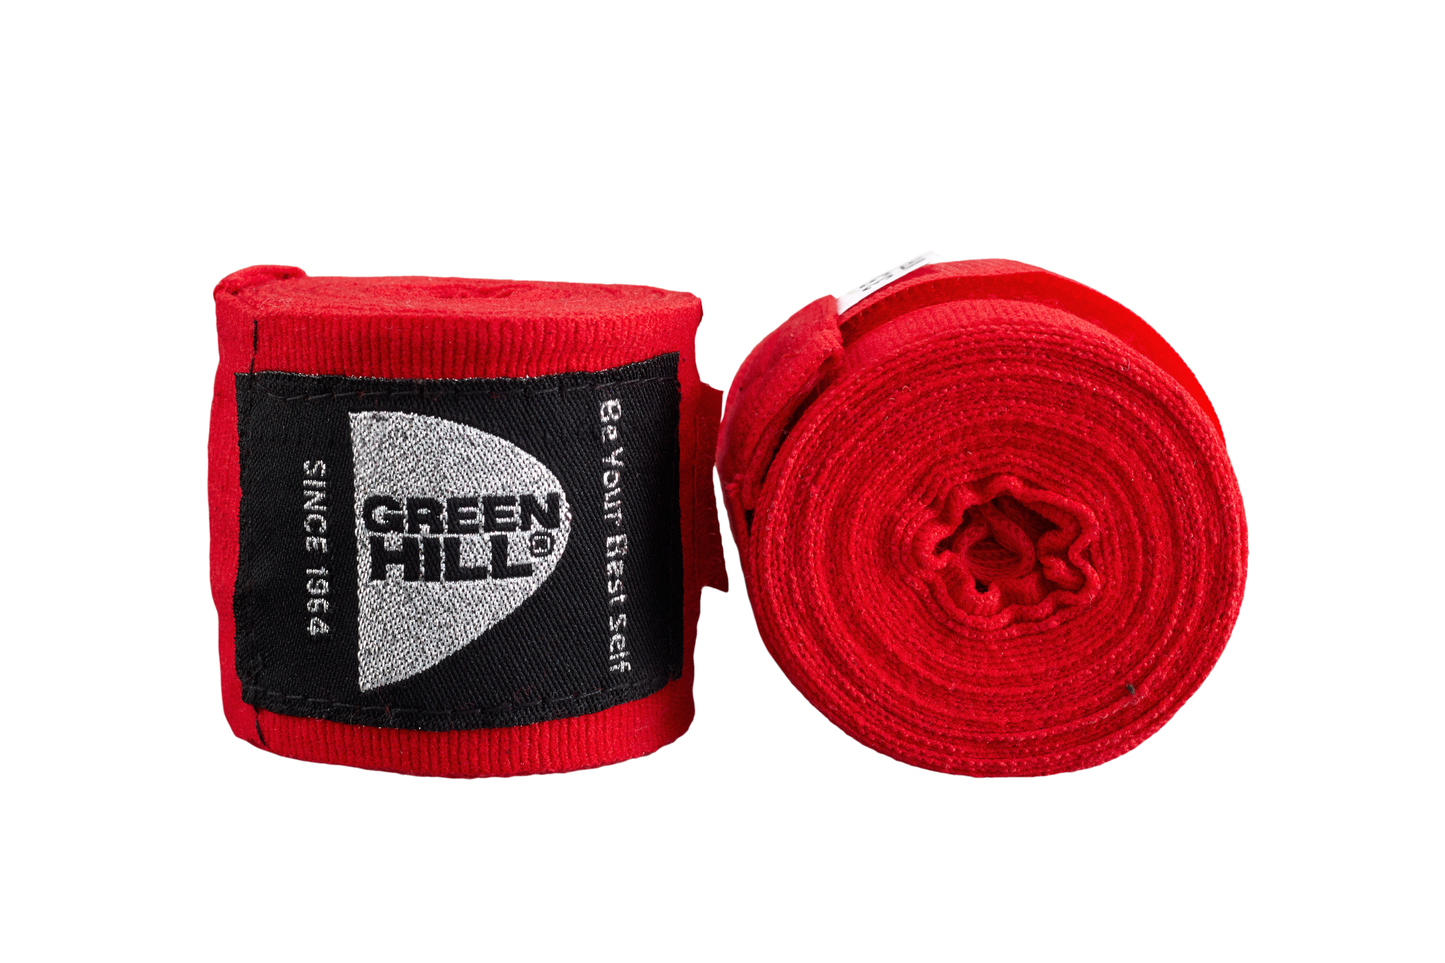 Bandagen Polyester halb-elastisch – Green Hill Sports